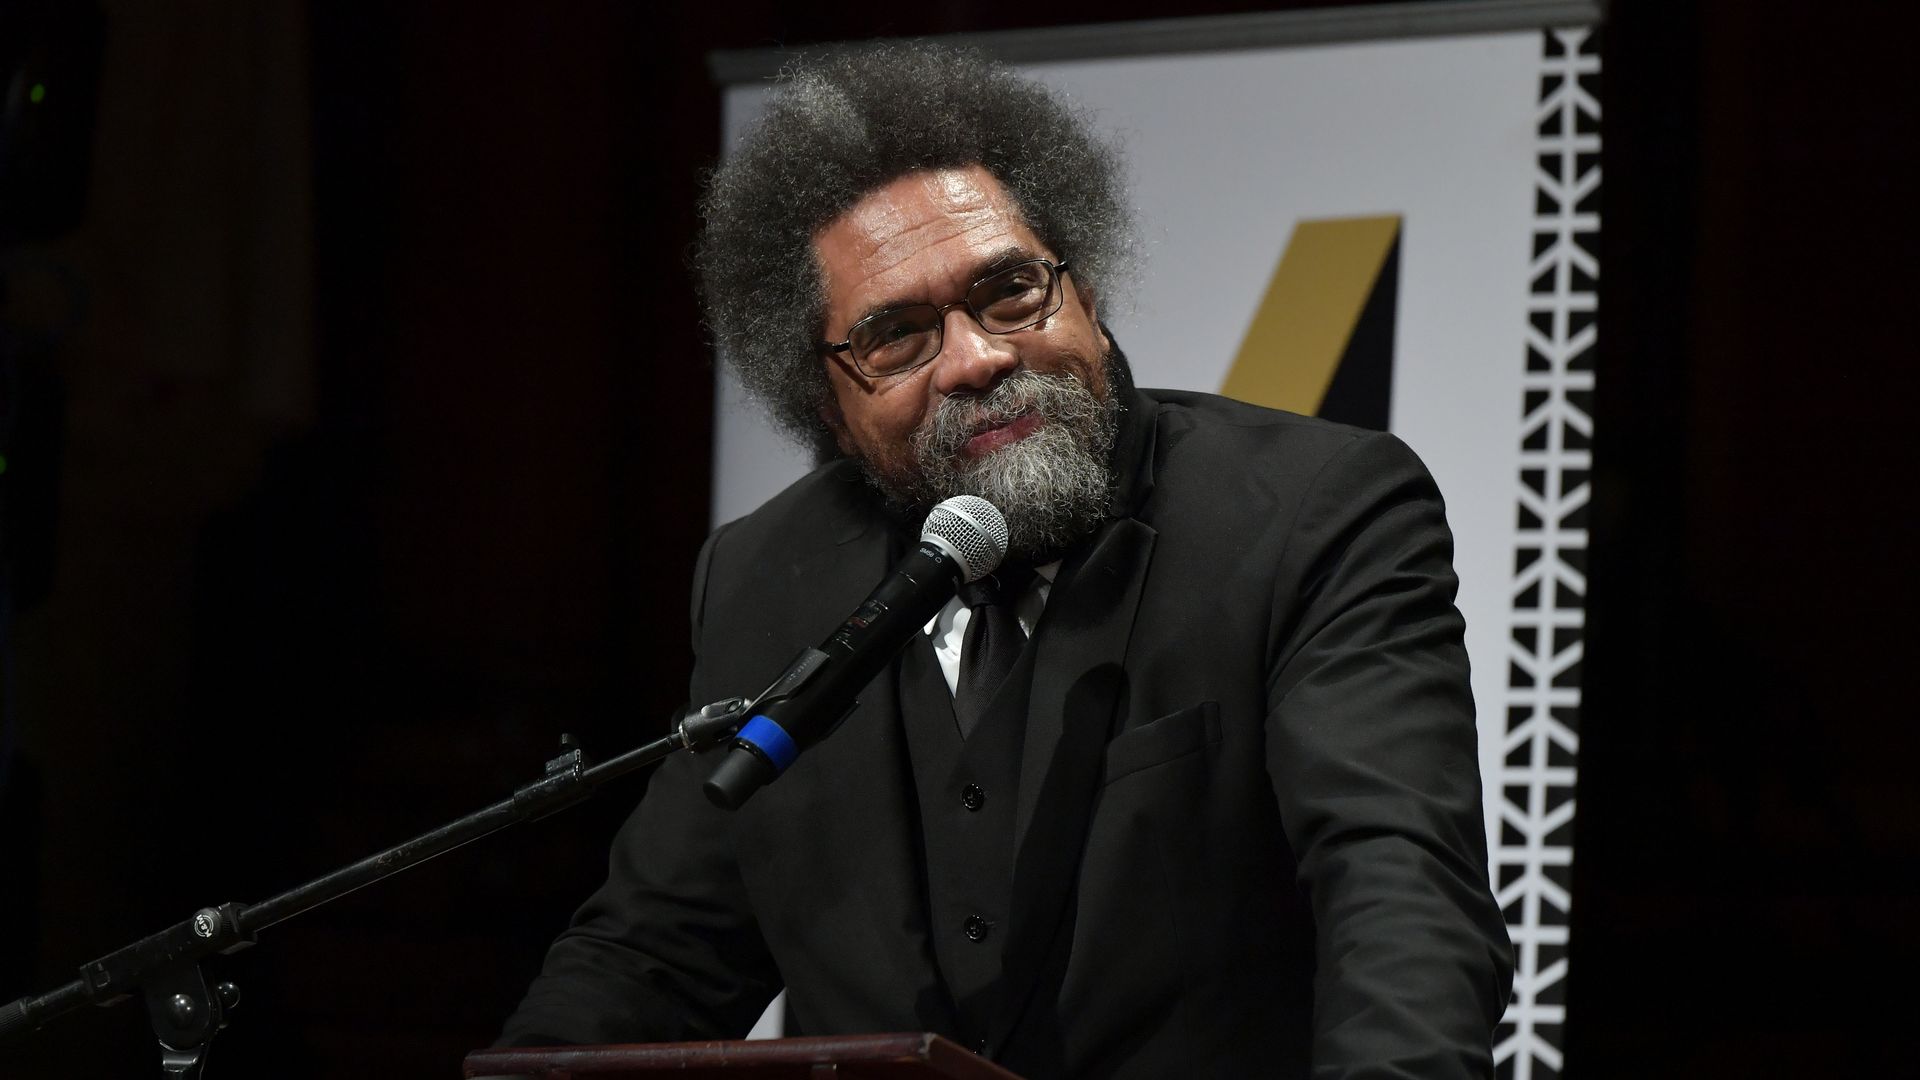 Cornel West speaks at the 2019 Hutchins Center Honors W.E.B. Du Bois Medal Ceremony at Harvard University.